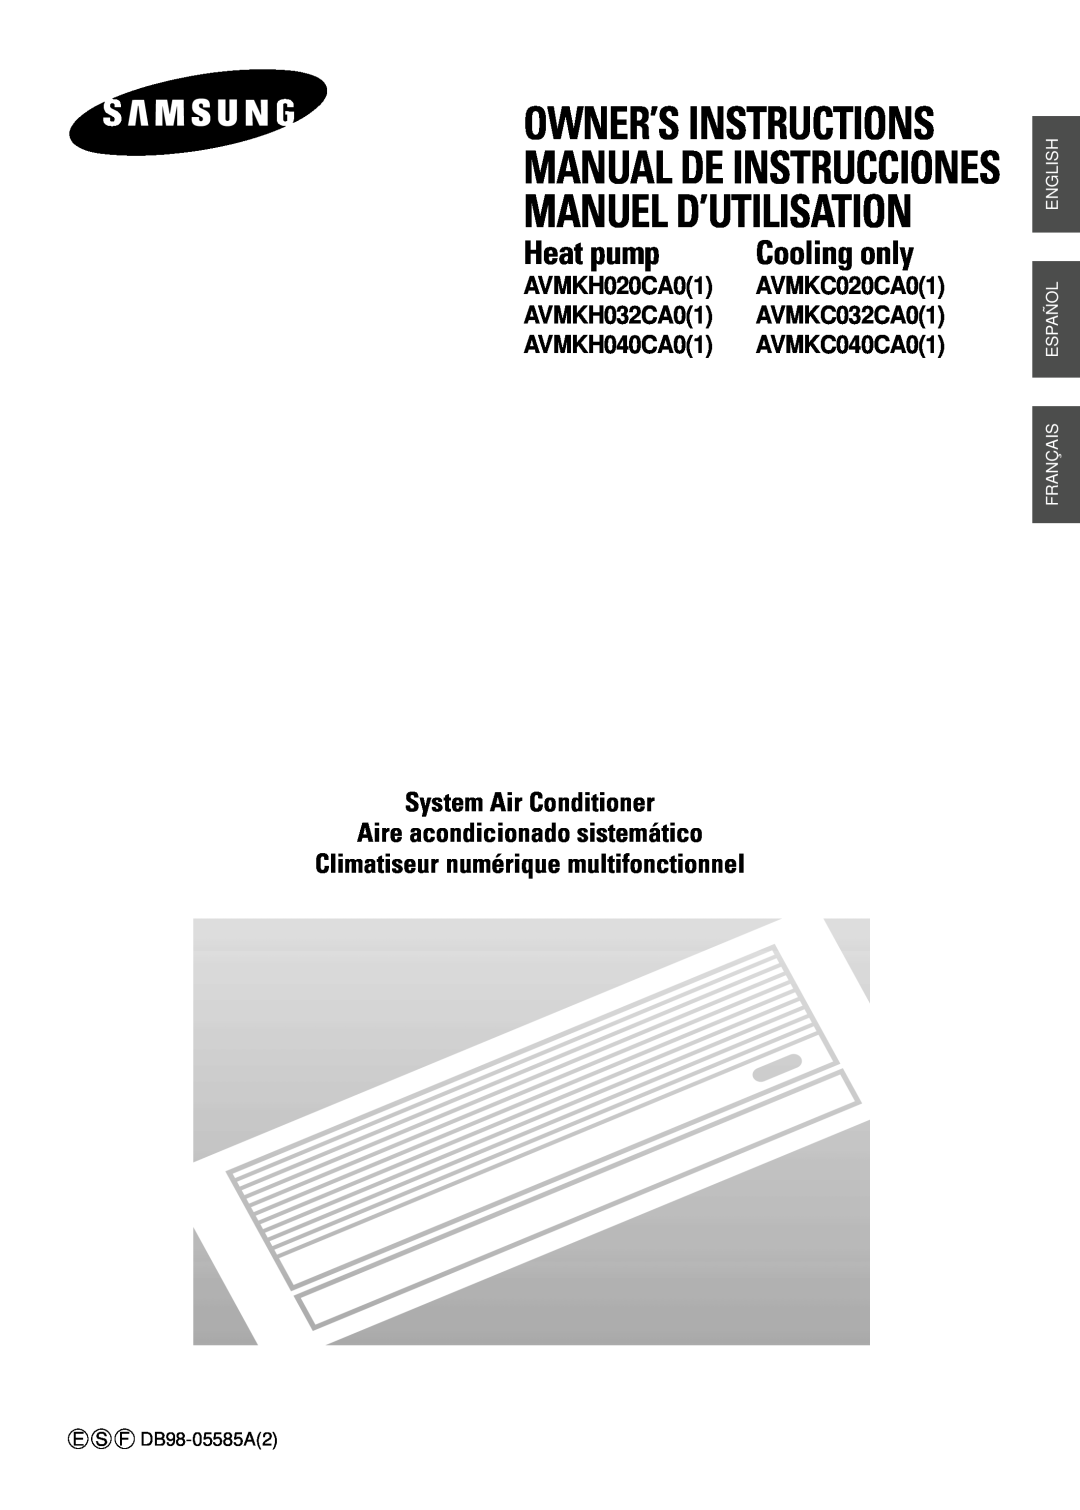 Samsung AVMKC032CA0(1) manuel dutilisation System Air Conditioner Aire acondicionado sistemático, Owner’S Instructions 